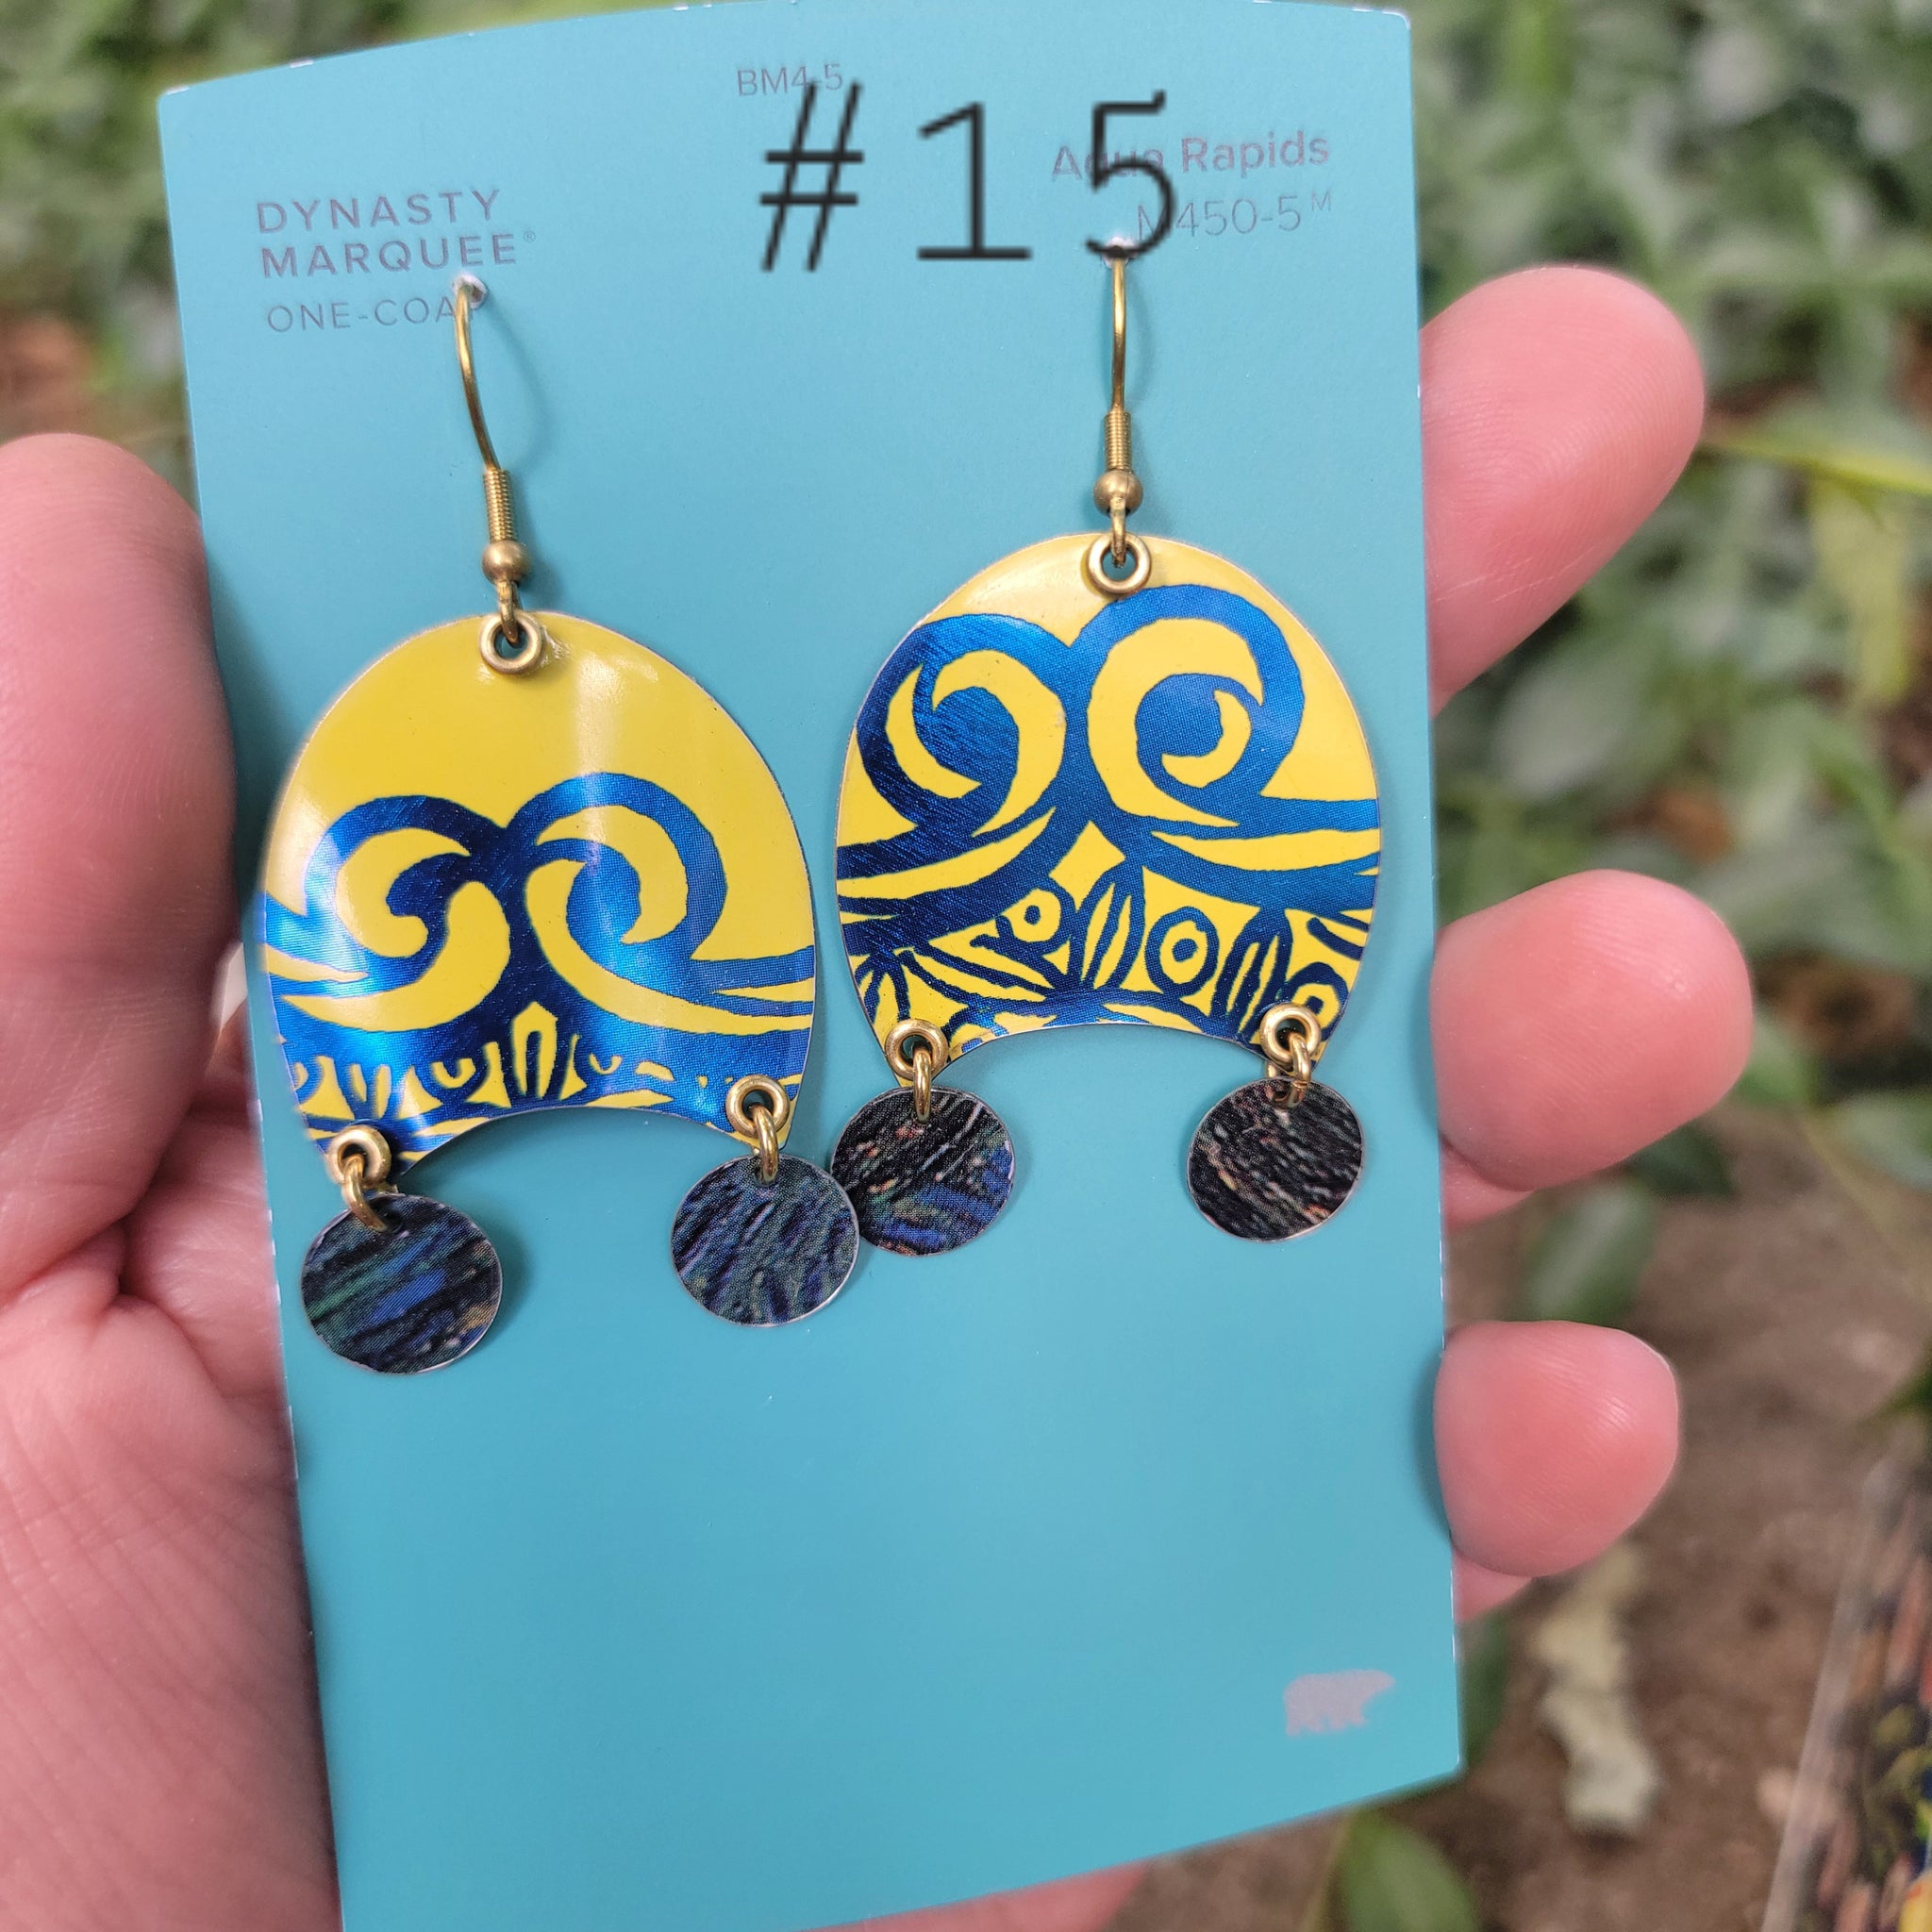 Blueberries & Lemon Curd Collection - Repurposed Tin Earrings